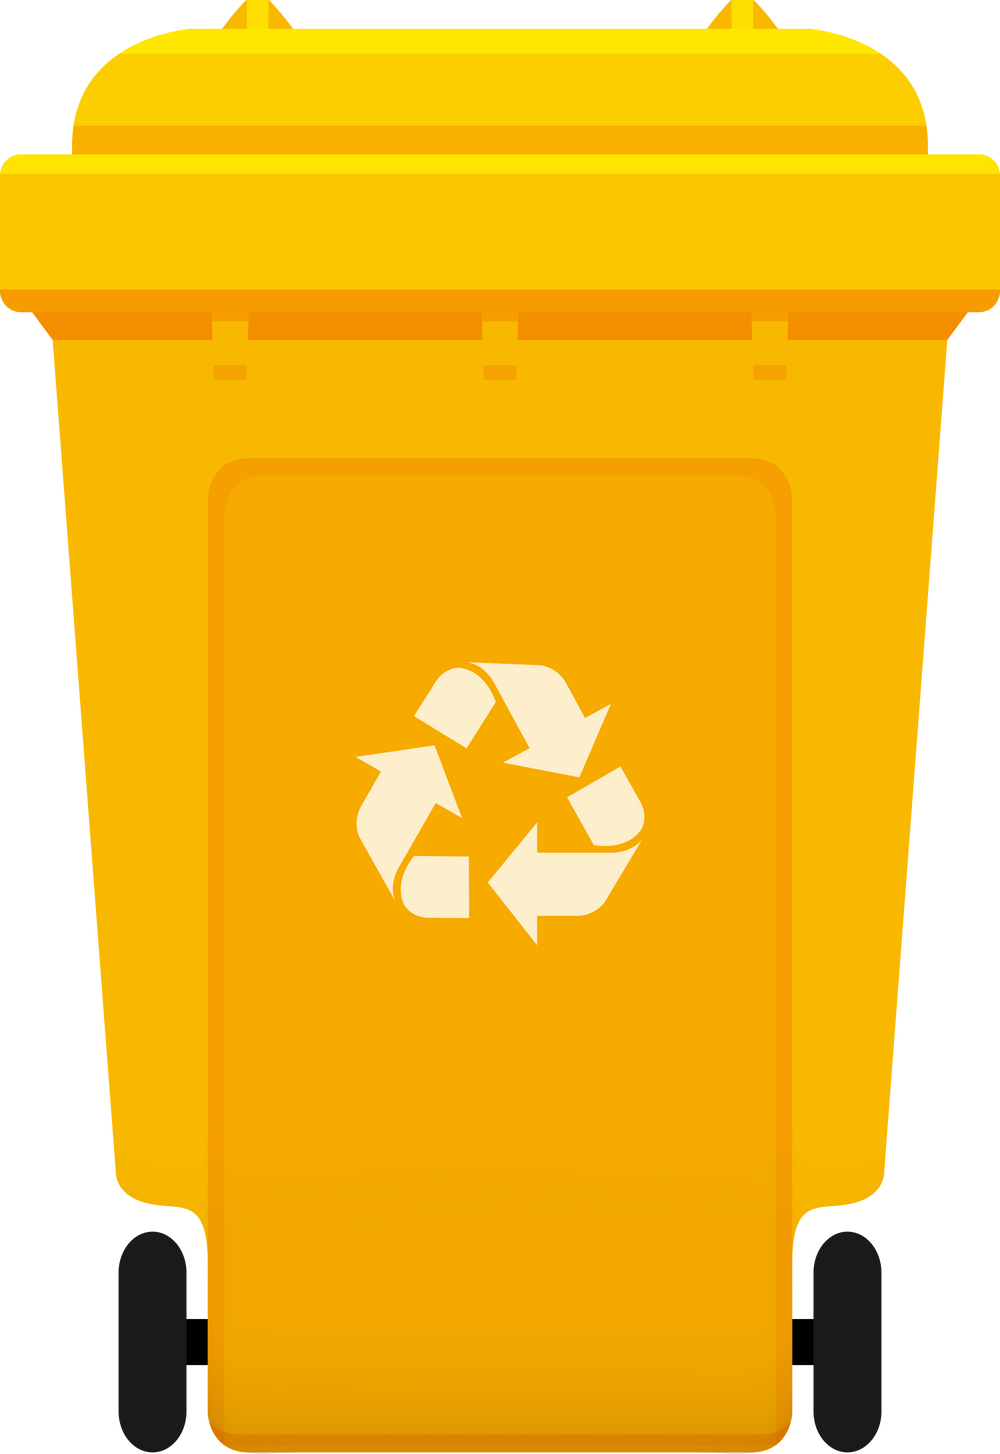 Yellow Recycle Bin Illustration